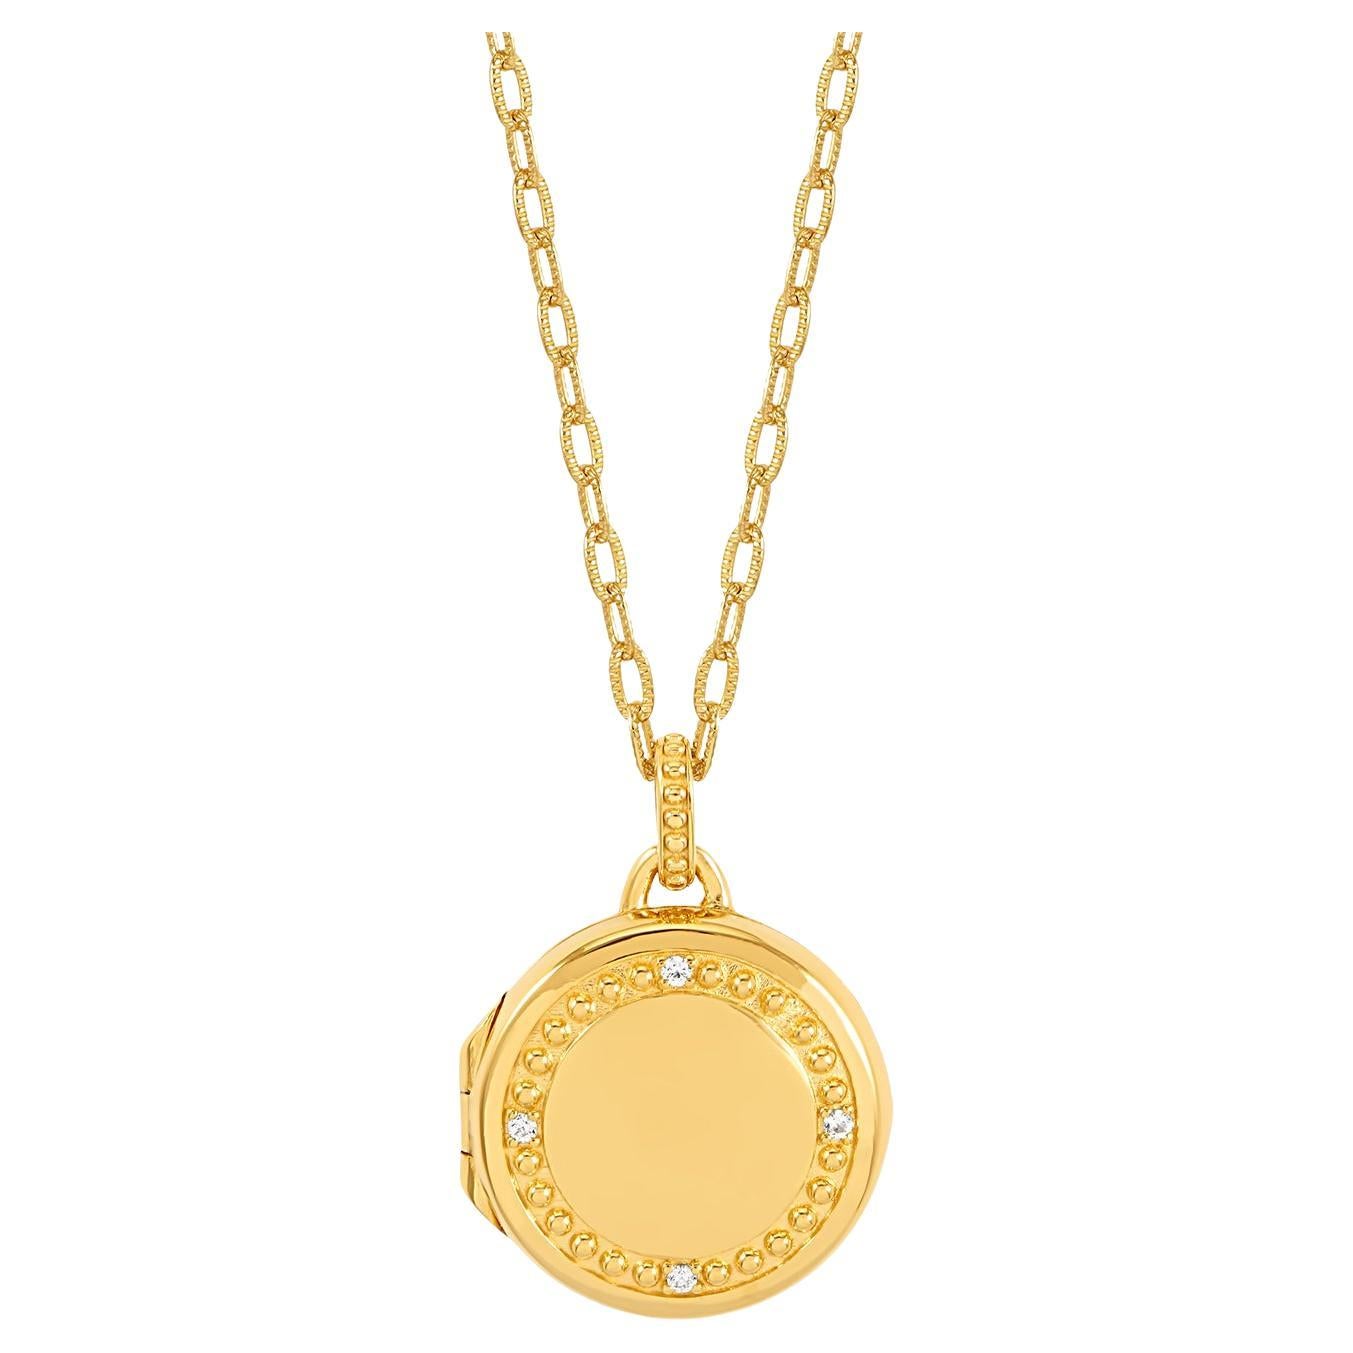 Gleam-Saphir-Medaillon aus 18 Karat Gold Vermeil